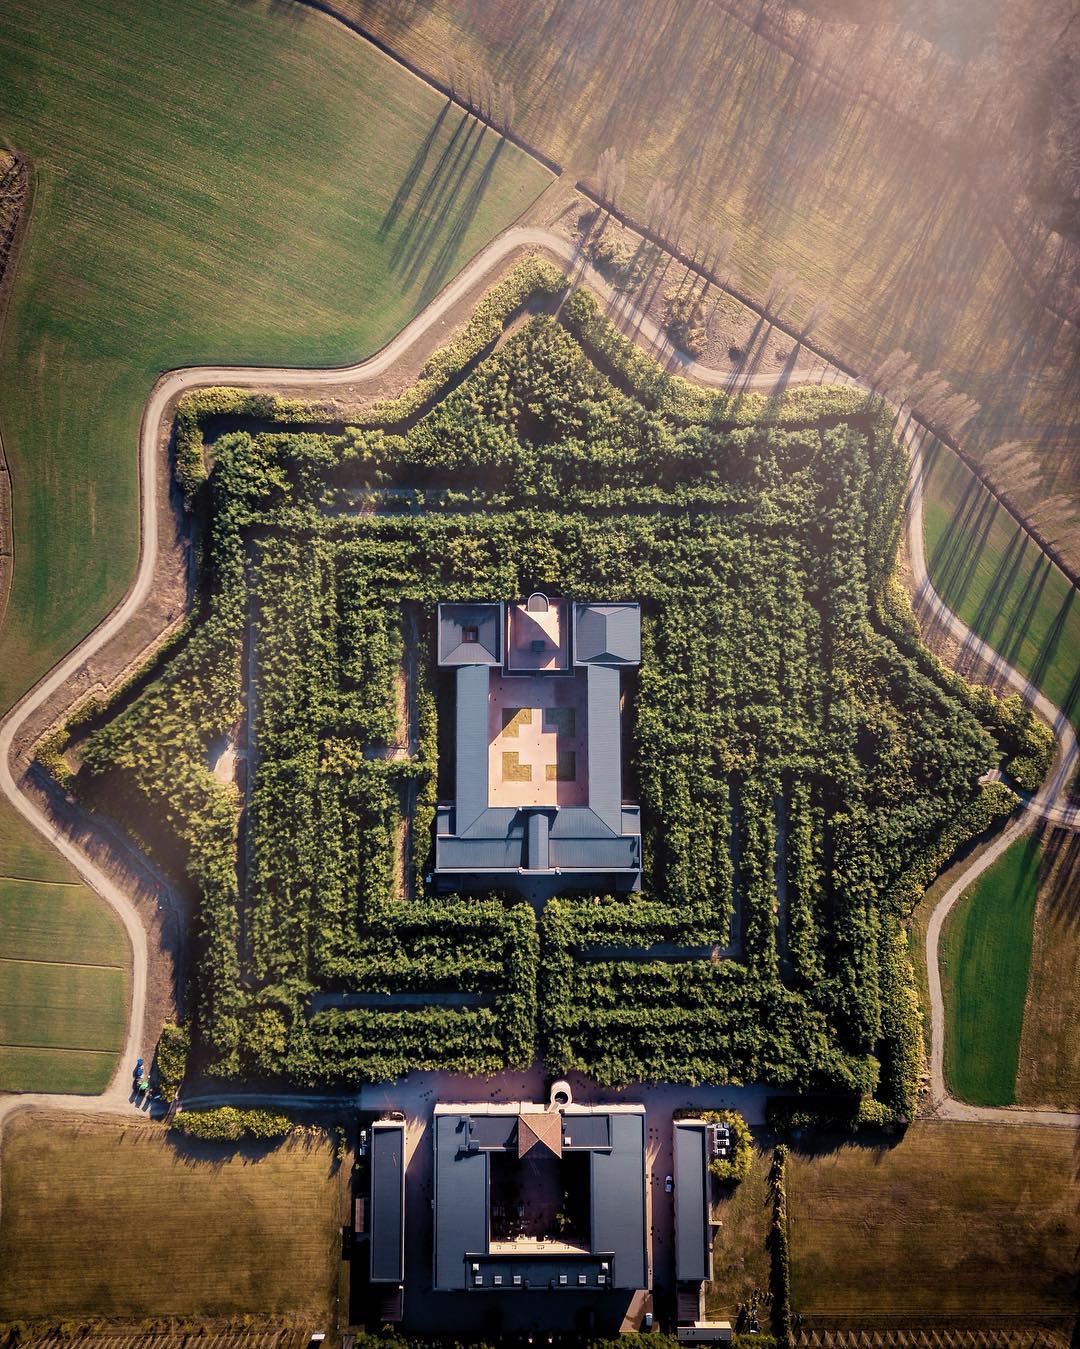 Labirinto della Masone, Fontanellato | Ph.@j84c via Instagram